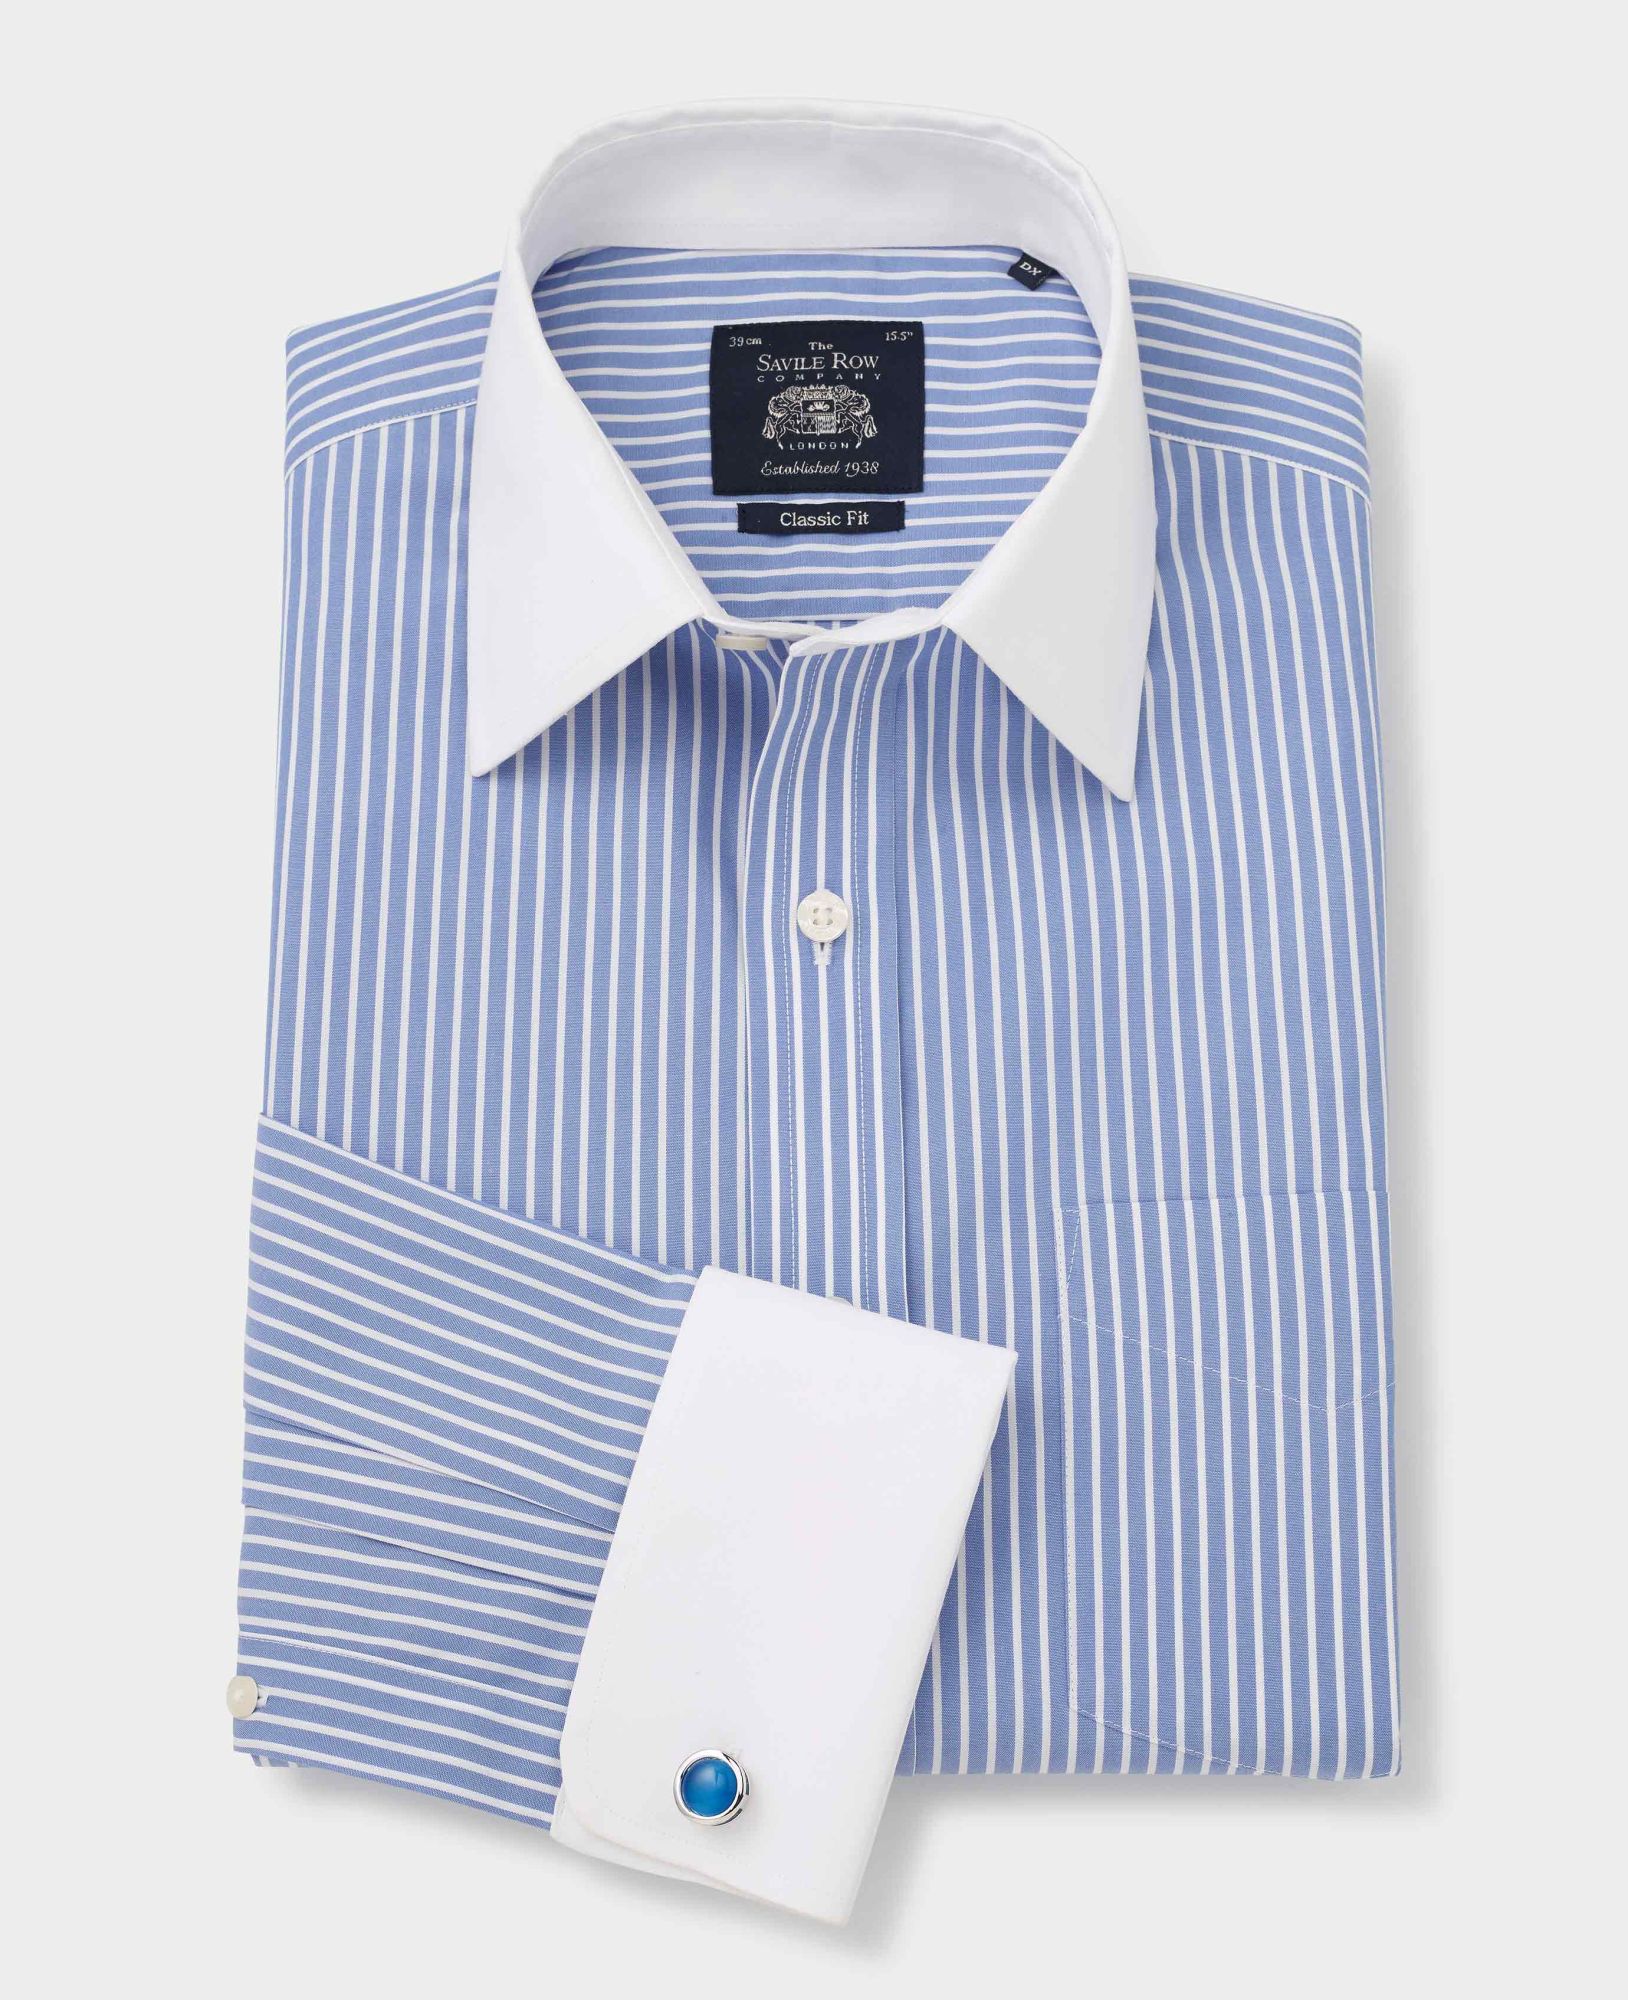 Blue White Stripe Classic Fit Non-Iron Shirt With White Collar & Cuffs - Double Cuff 20